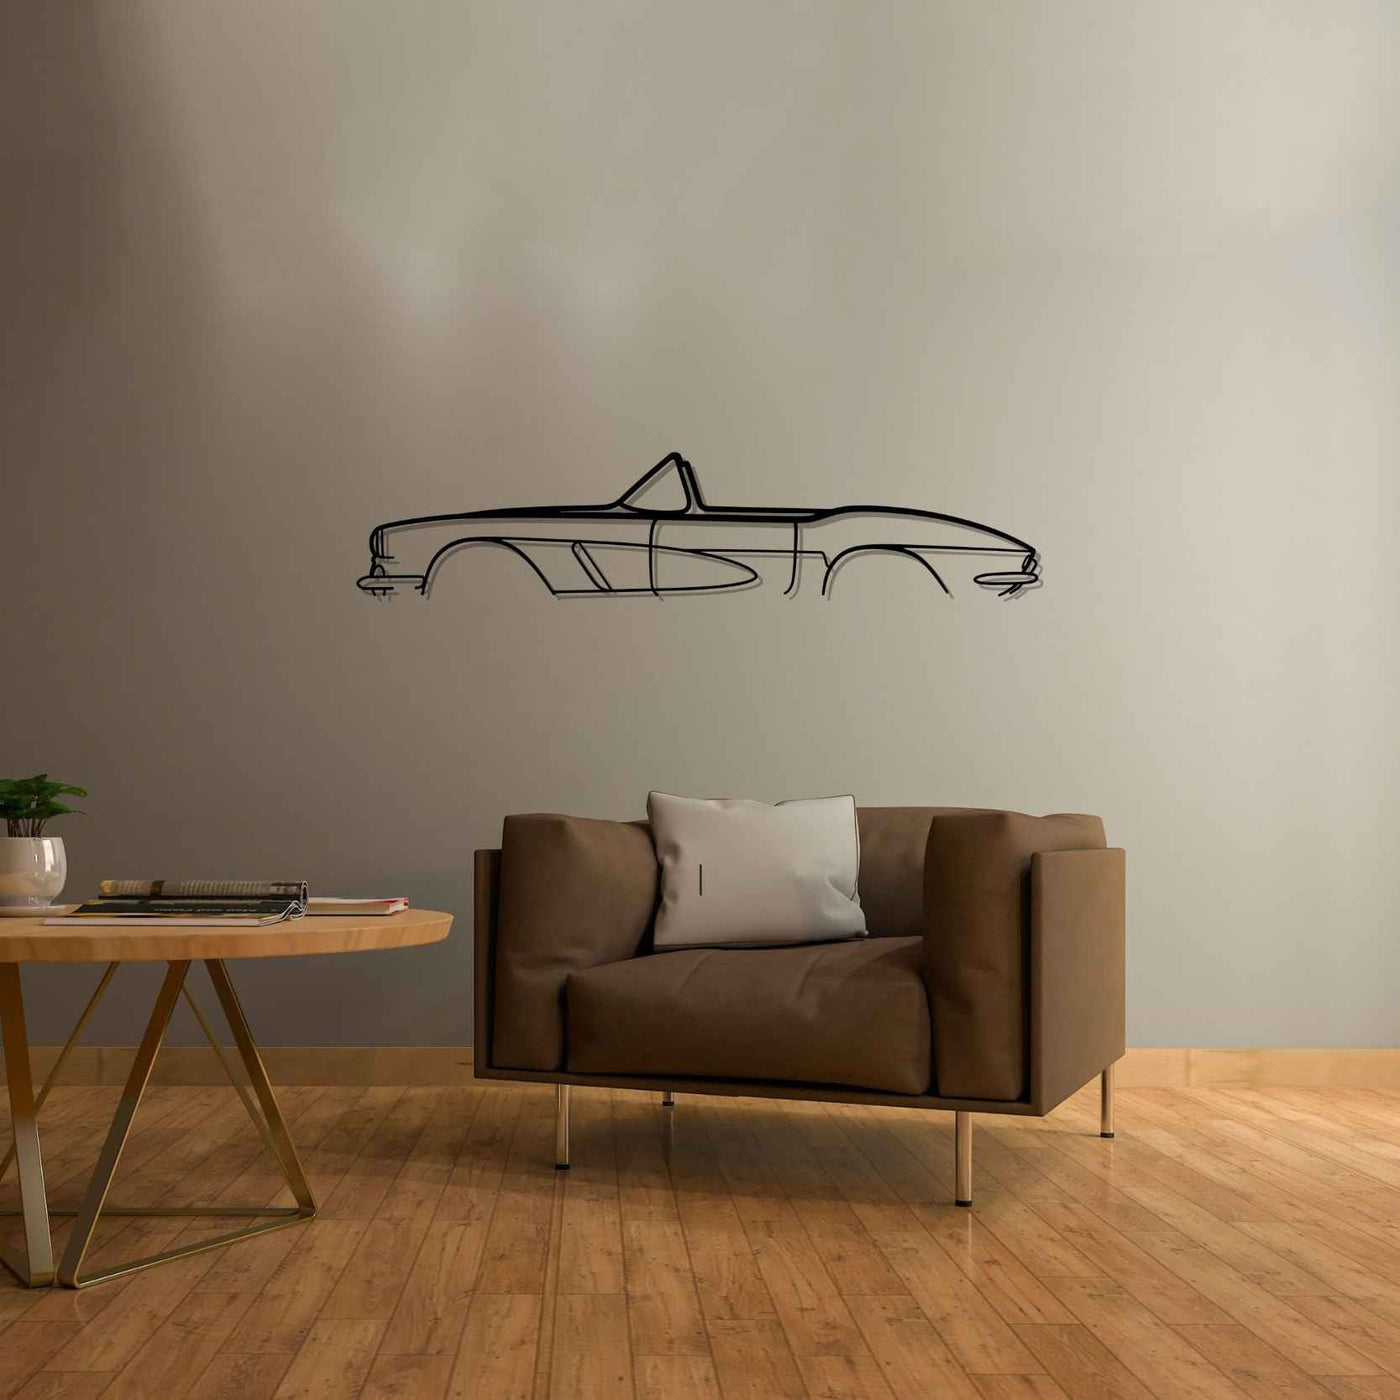 Corvette C1 1962 Classic Silhouette Metal Wall Art